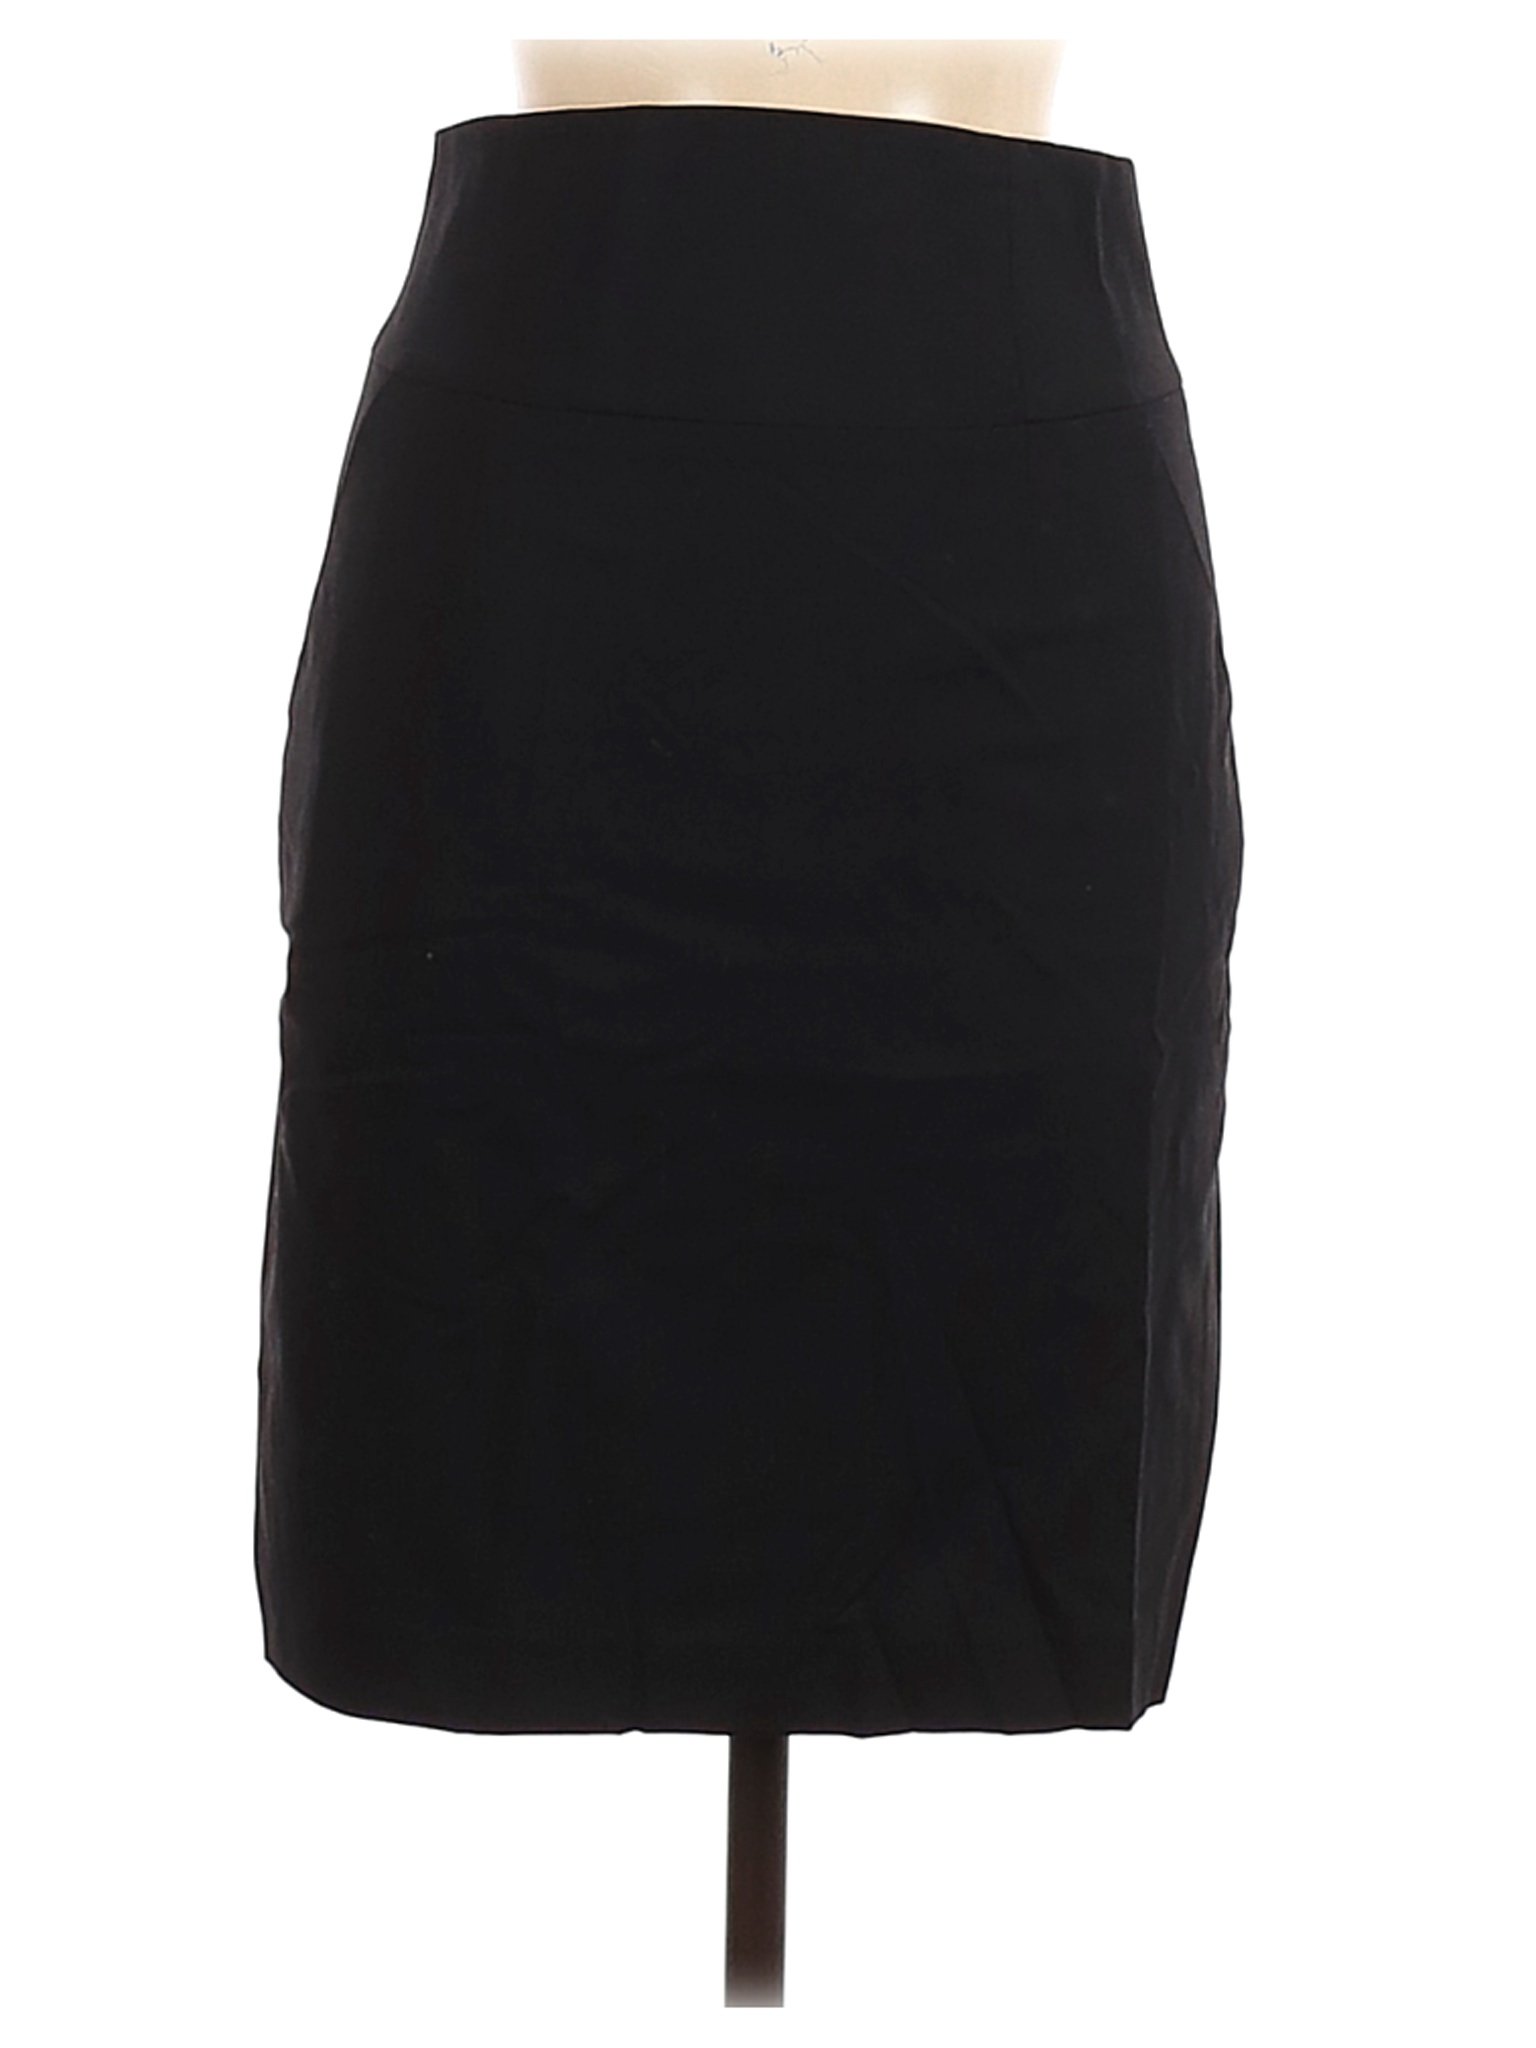 Banana Republic Women Black Wool Skirt 2 | eBay